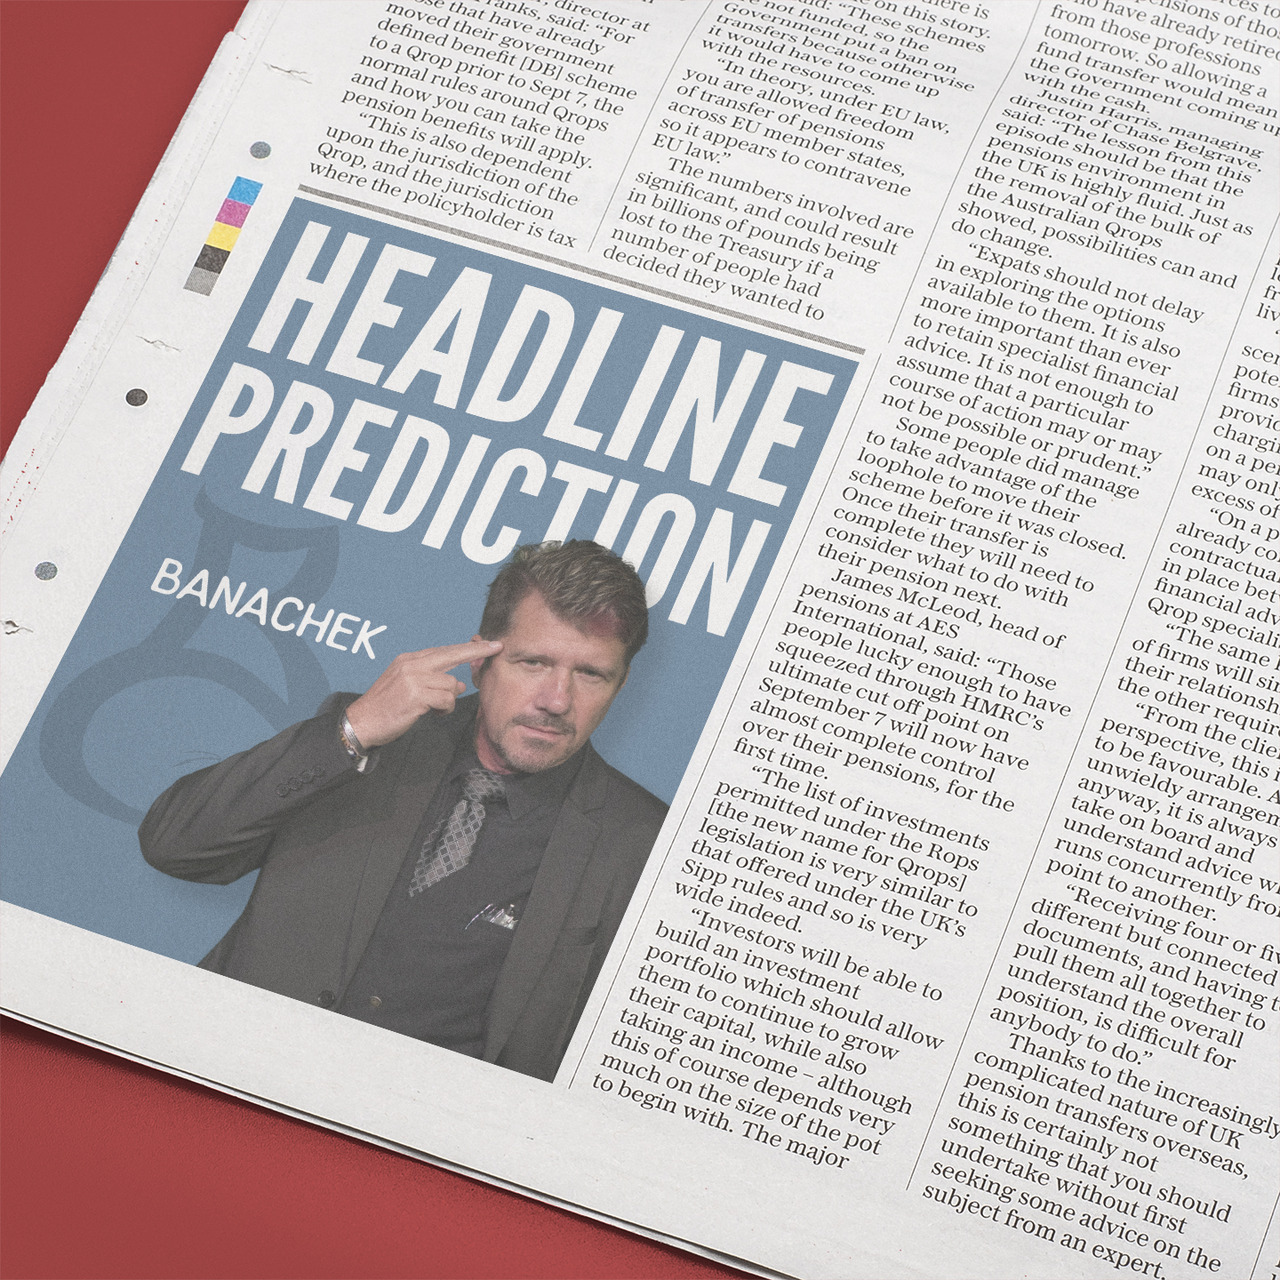 Banachek - Headline Prediction